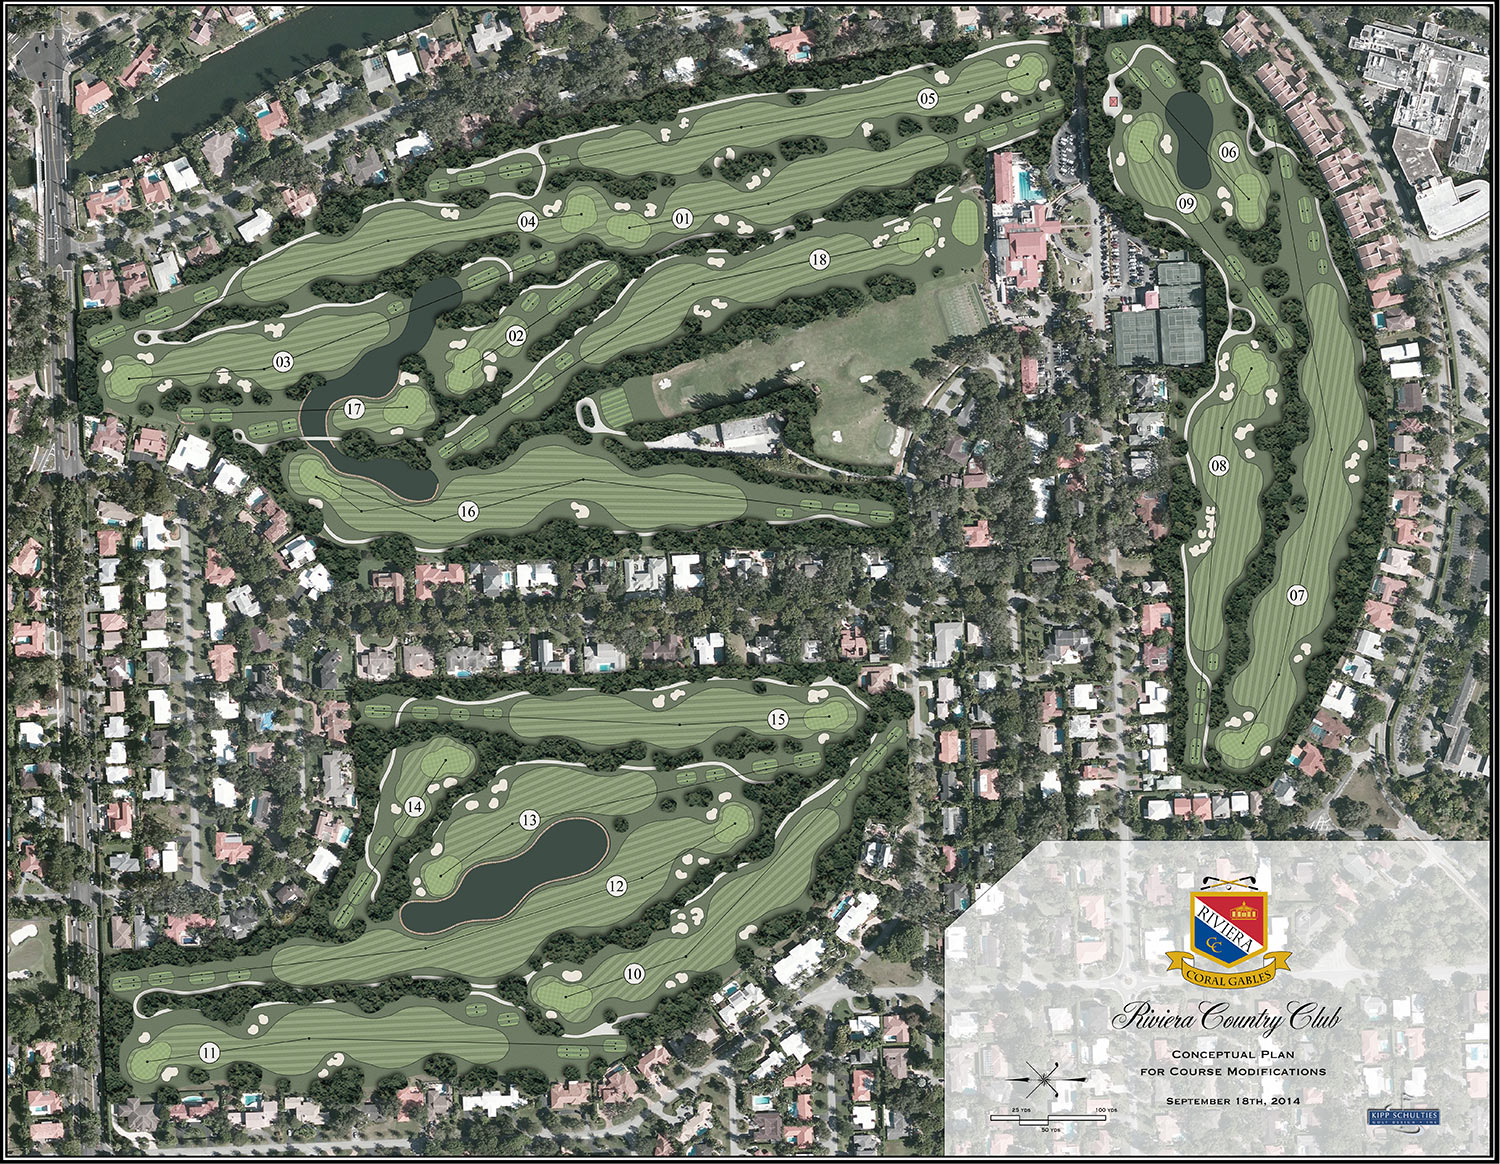 Riviera Country Club | Kipp Schulties Golf Design, Inc.